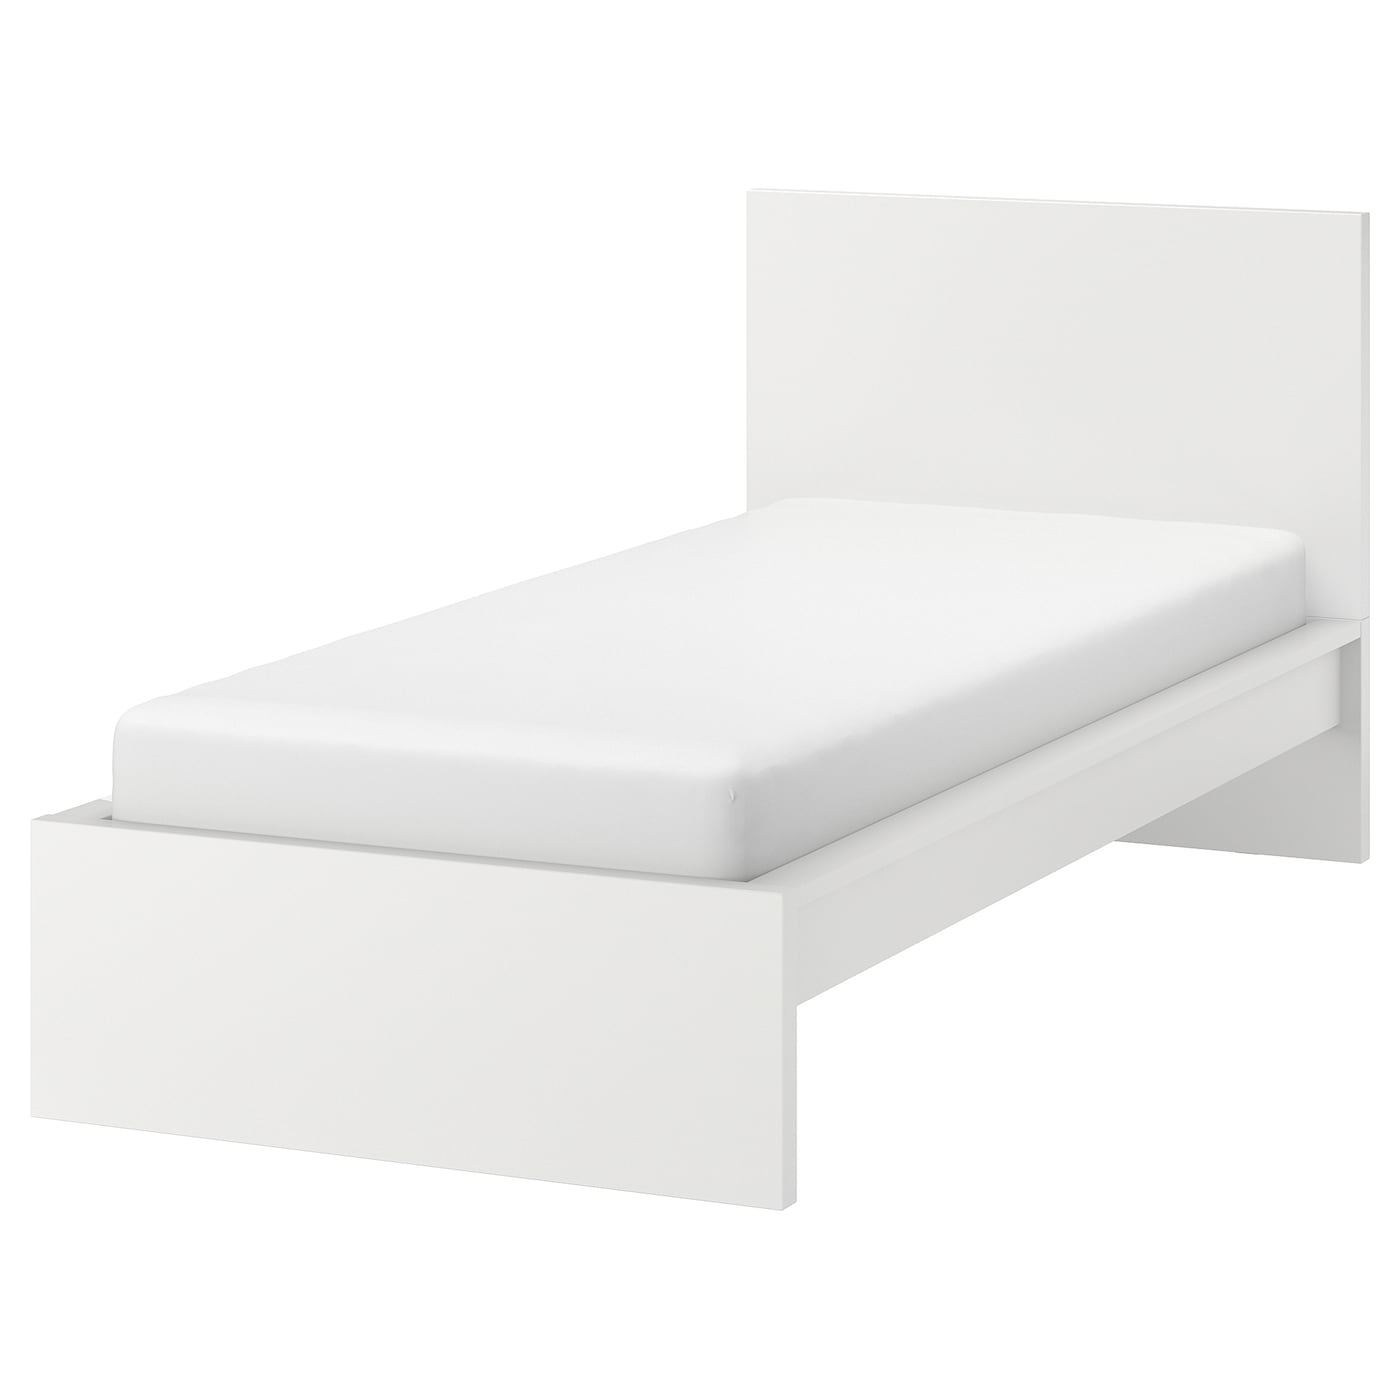 Каркас кровати, высокий - IKEA MALM, 200х90 см, белый, МАЛЬМ ИКЕА